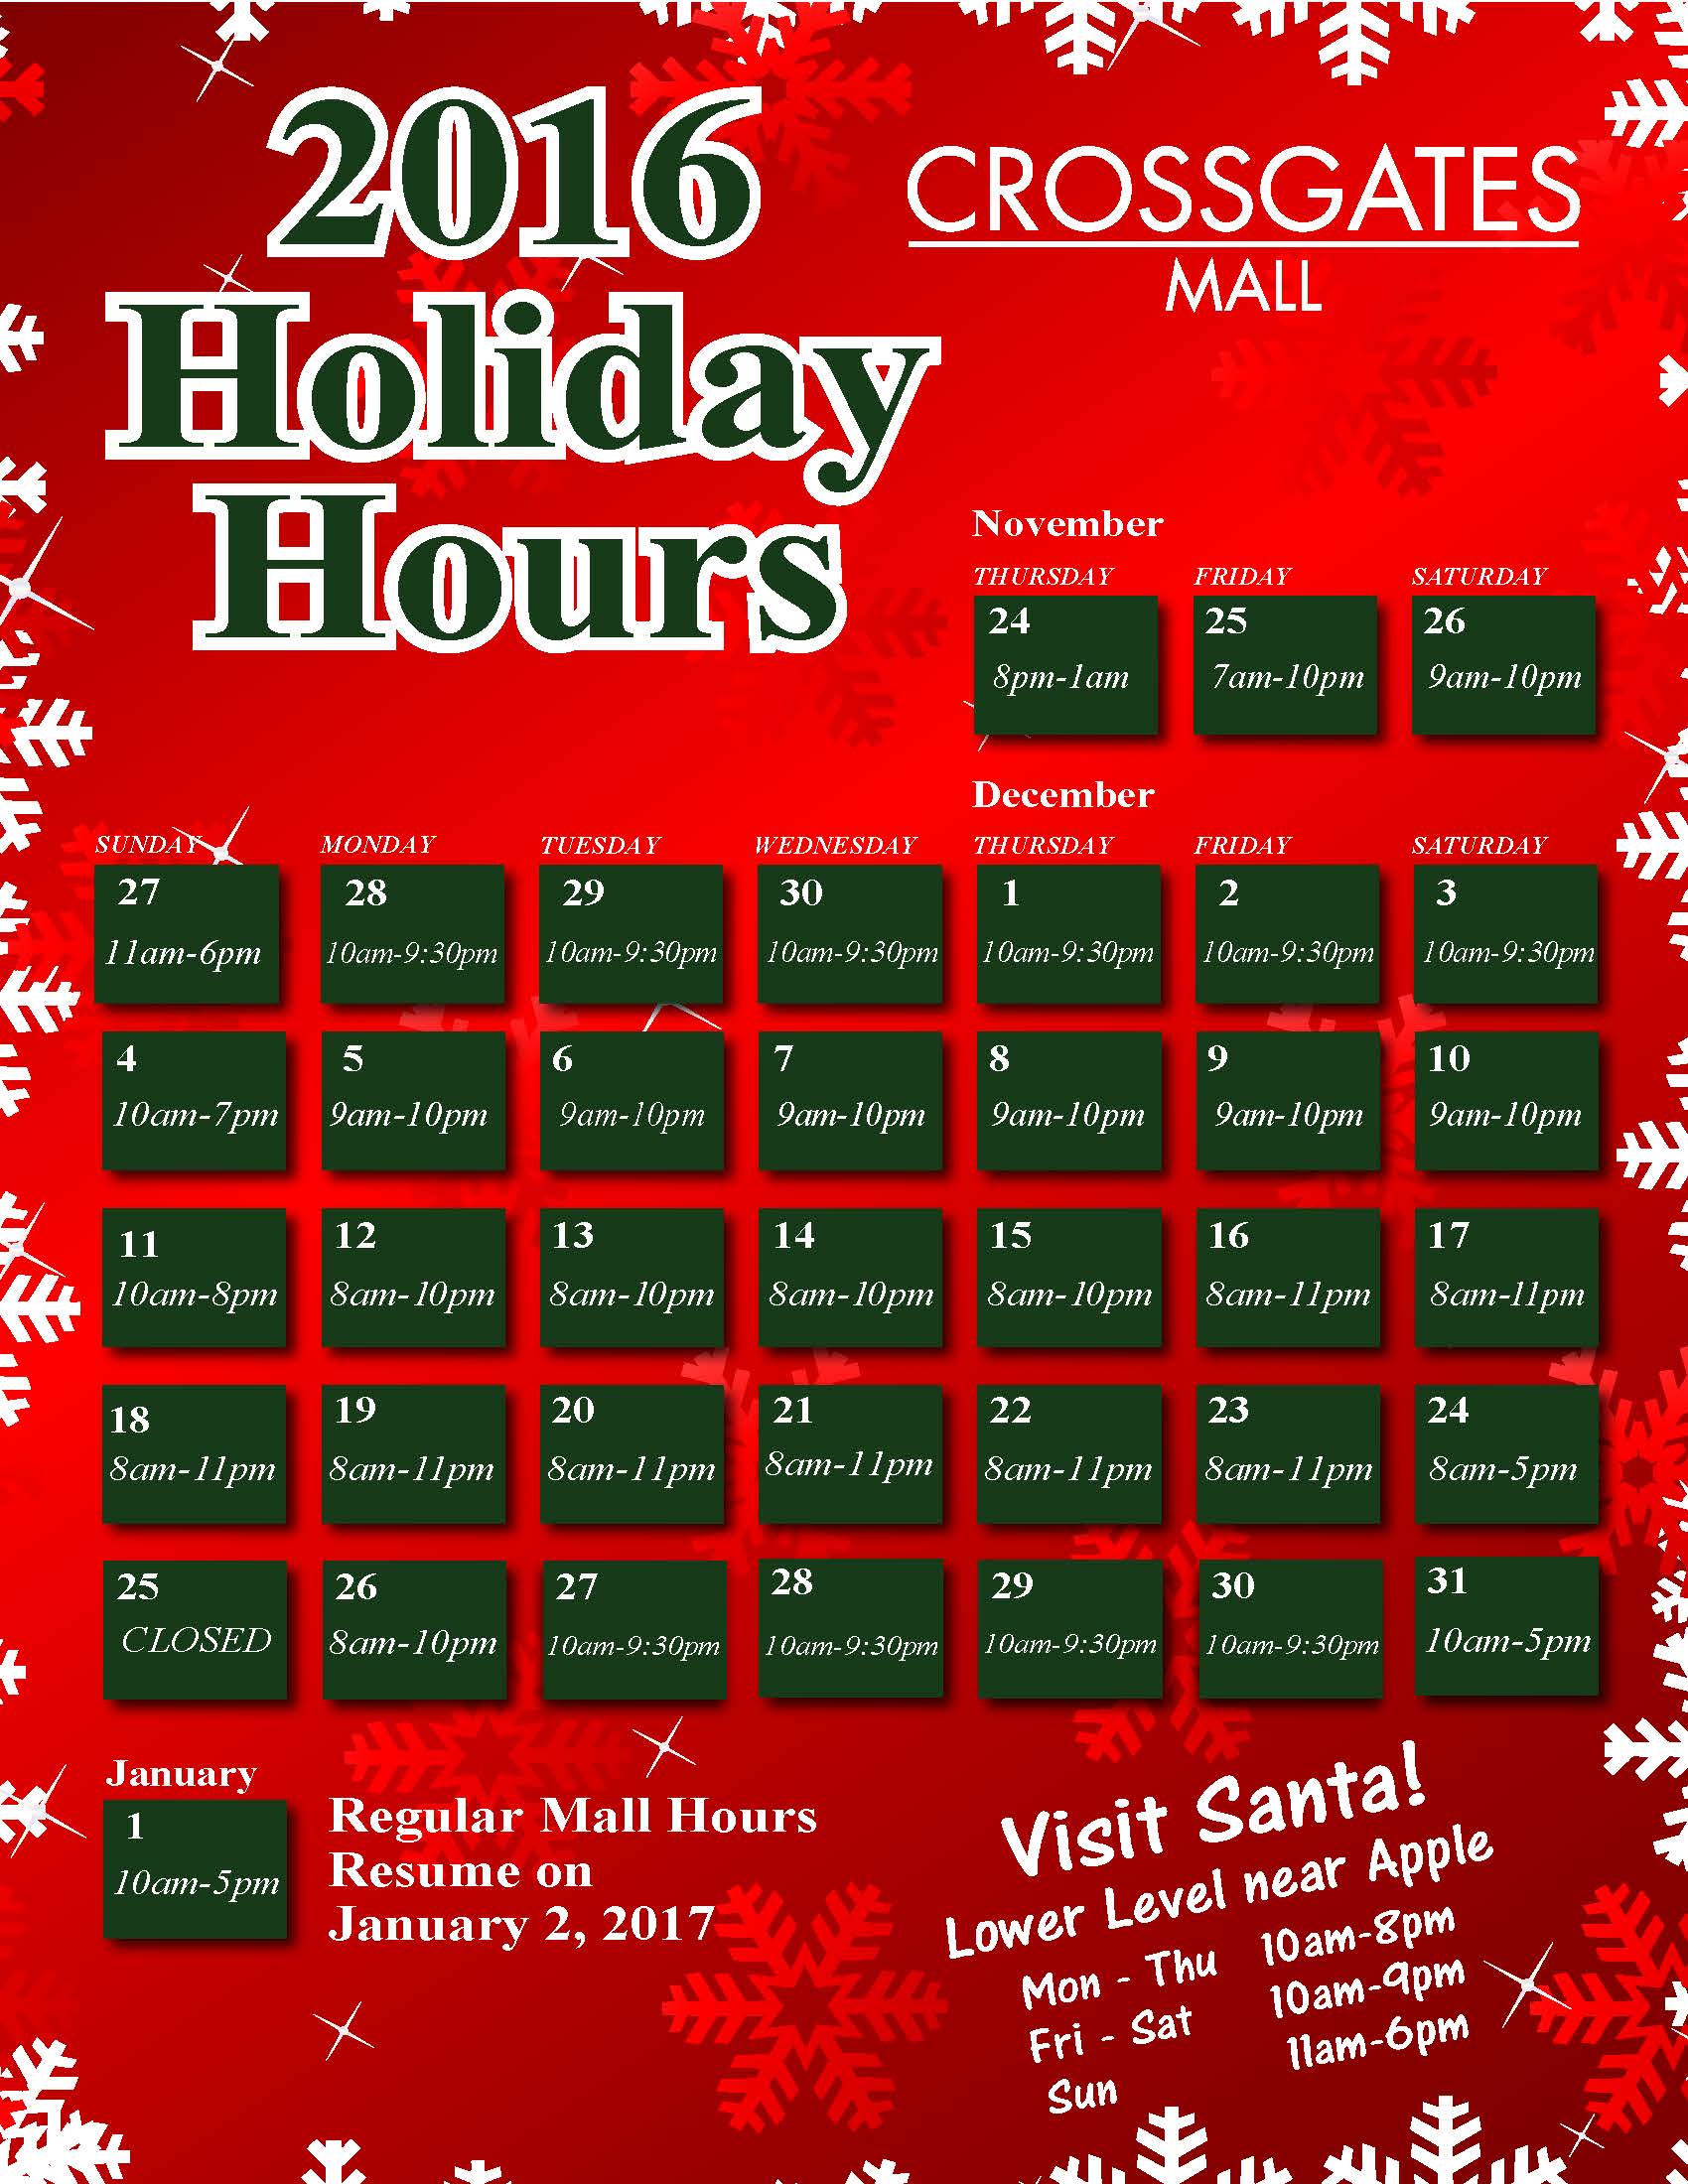 Hours - Crossgates Mall